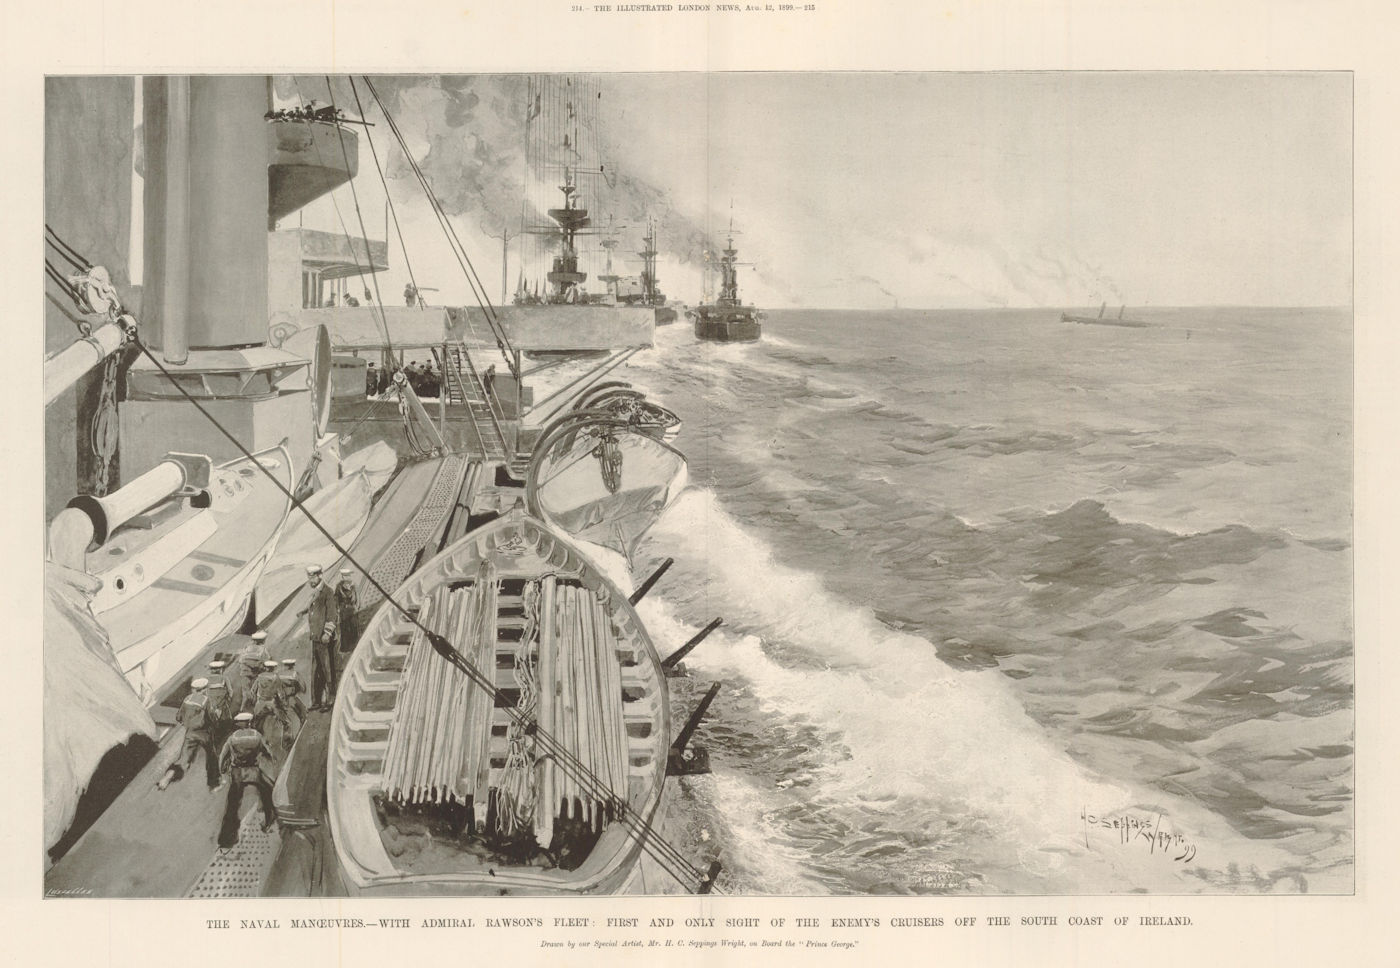 Associate Product Royal Naval Manoeuvres. Admiral Rawson's Fleet. South Coast of Ireland 1899